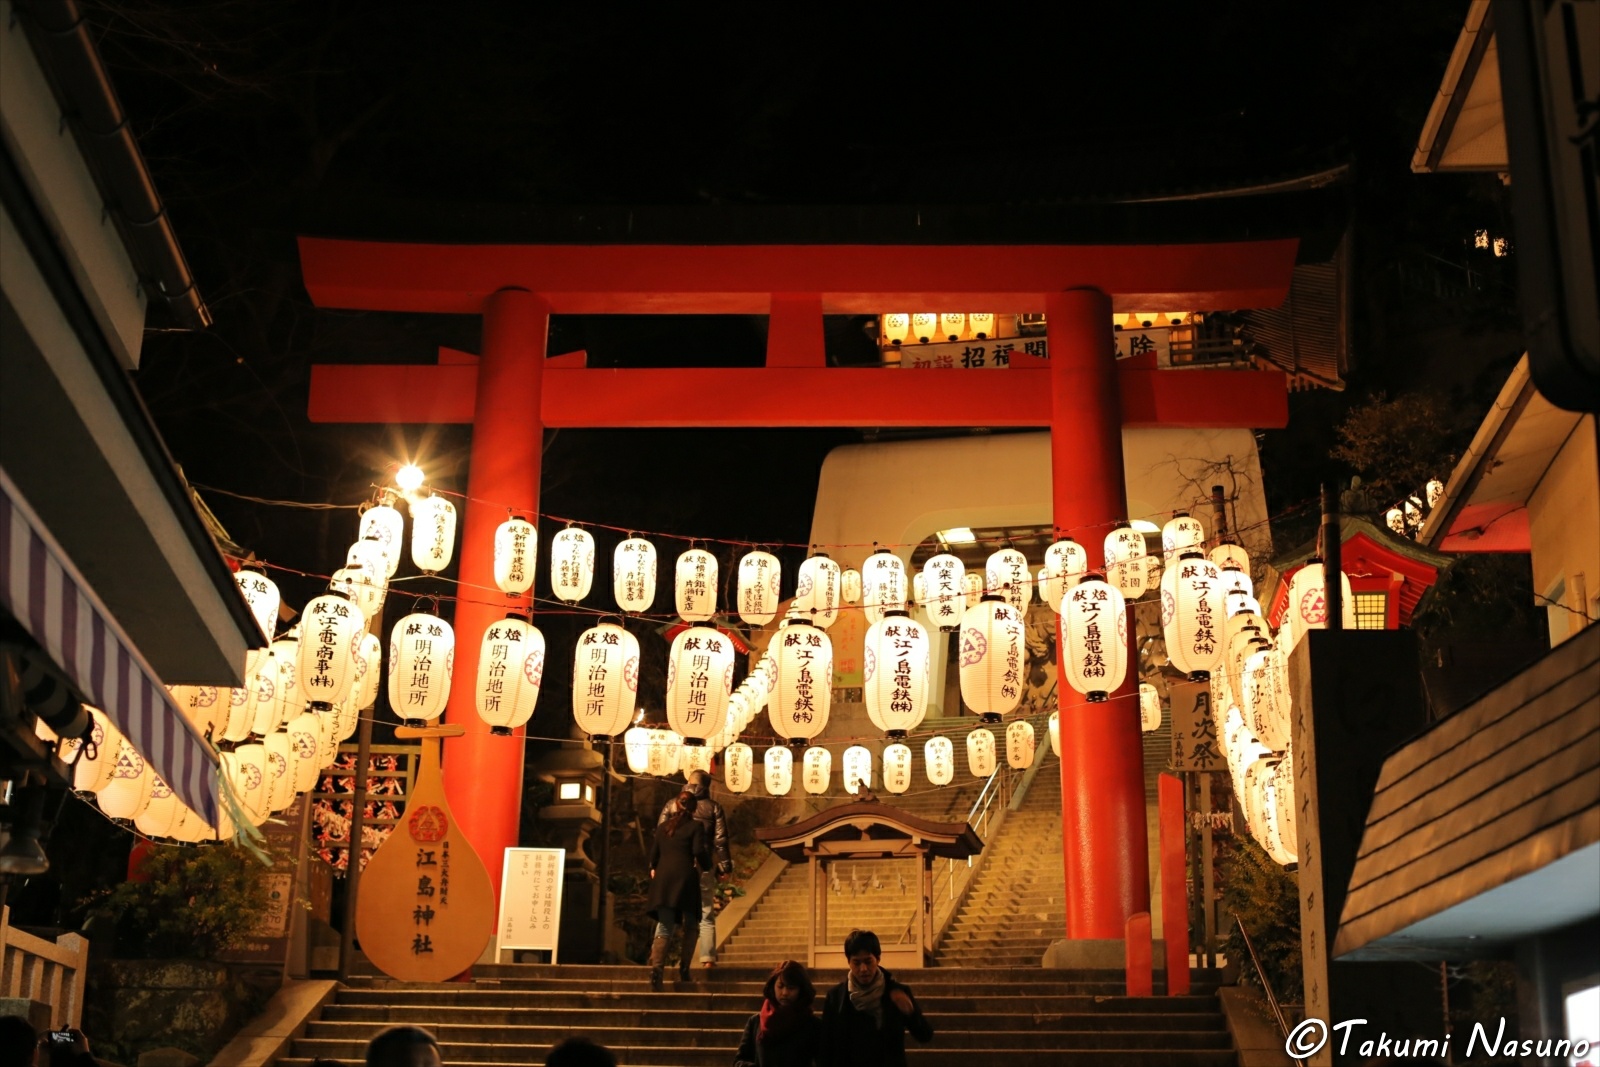 Big Shinto Gate with Lanterns in Enoshima Island